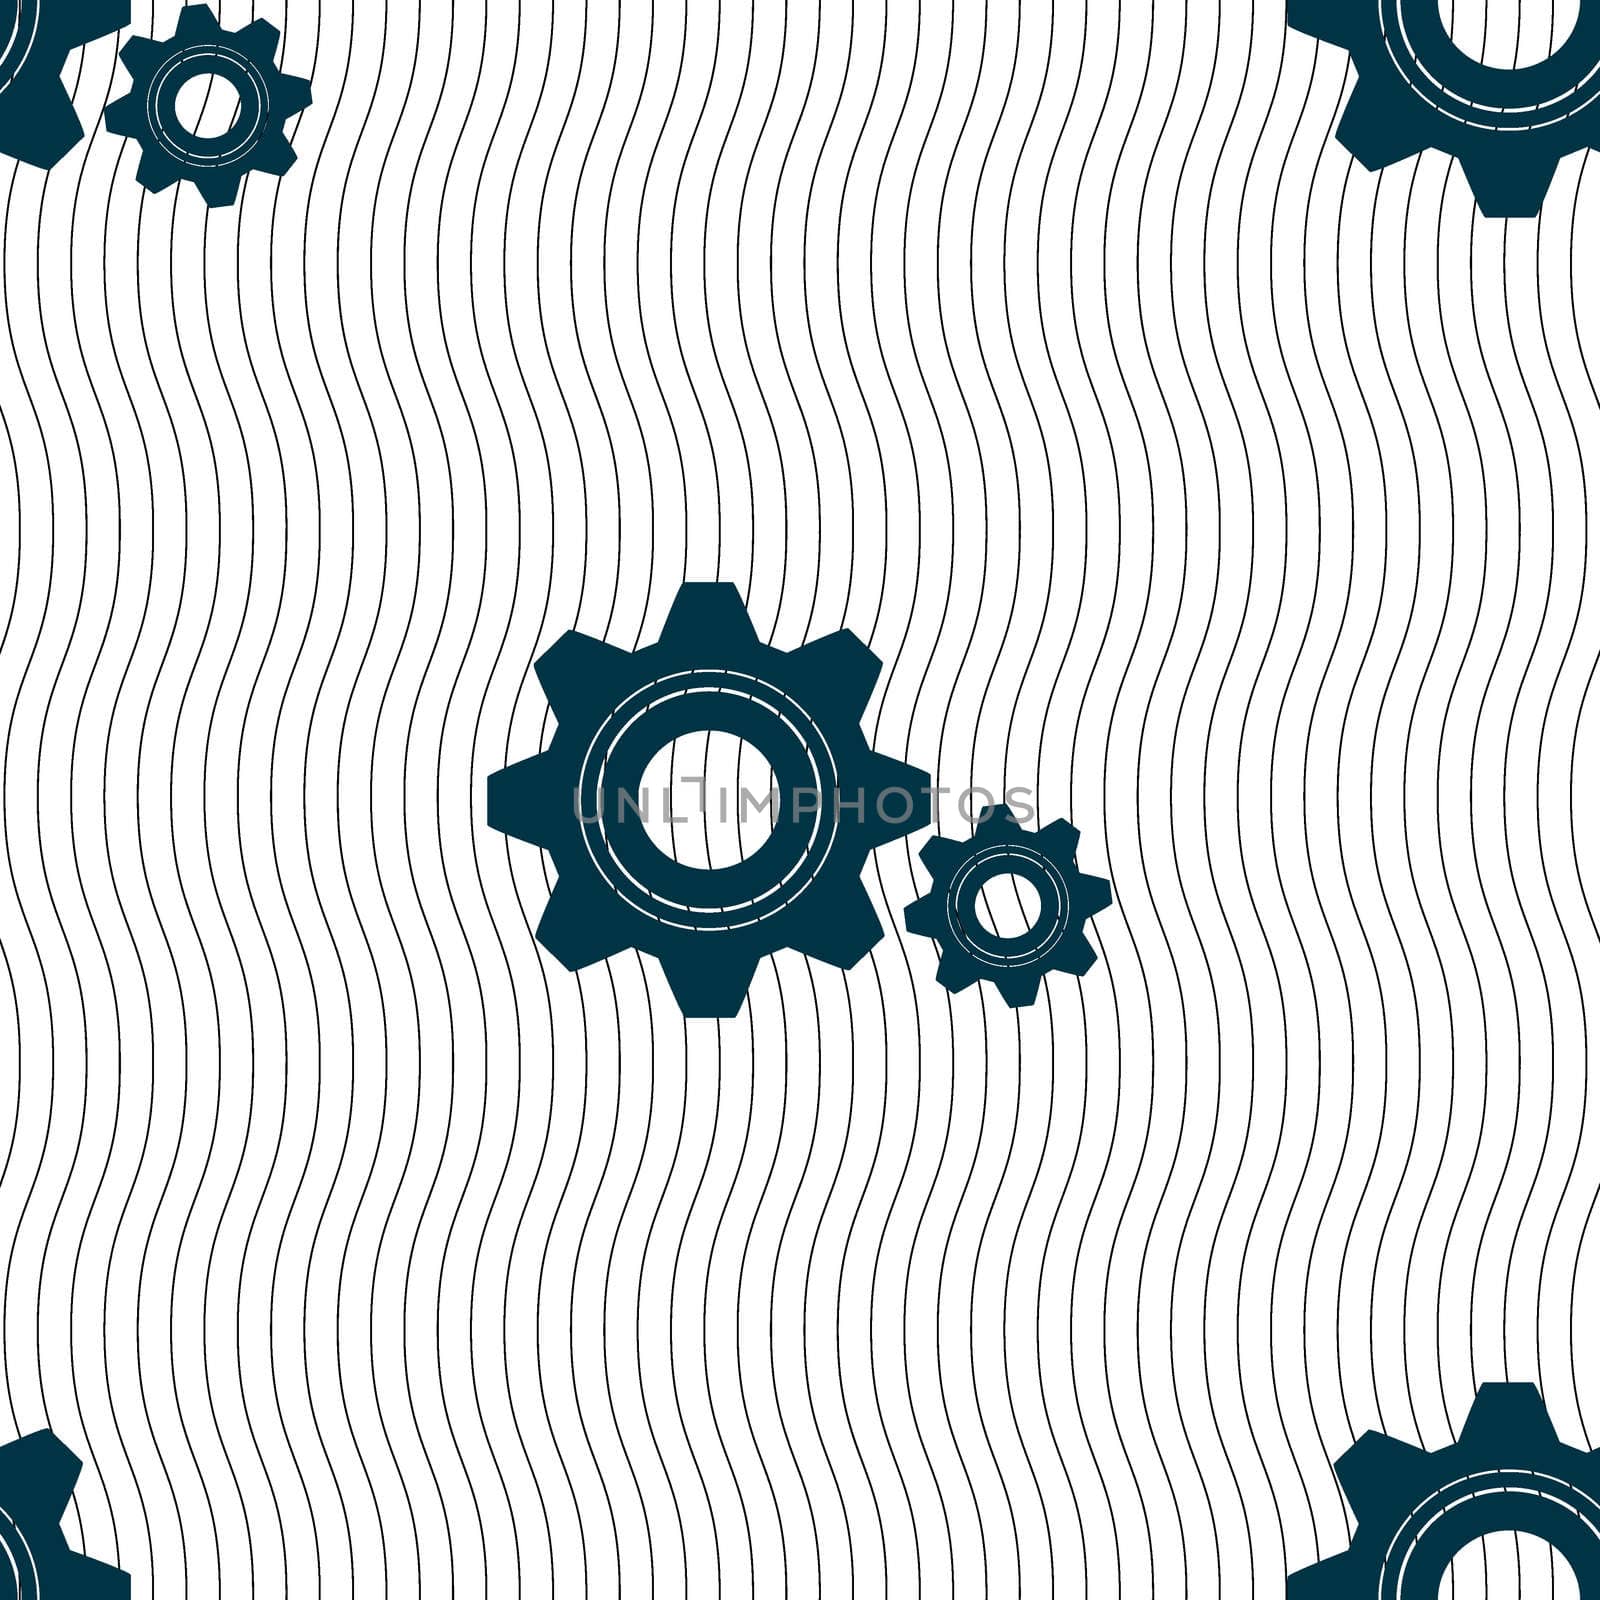 Cog settings sign icon. Cogwheel gear mechanism symbol. Seamless pattern with geometric texture. illustration